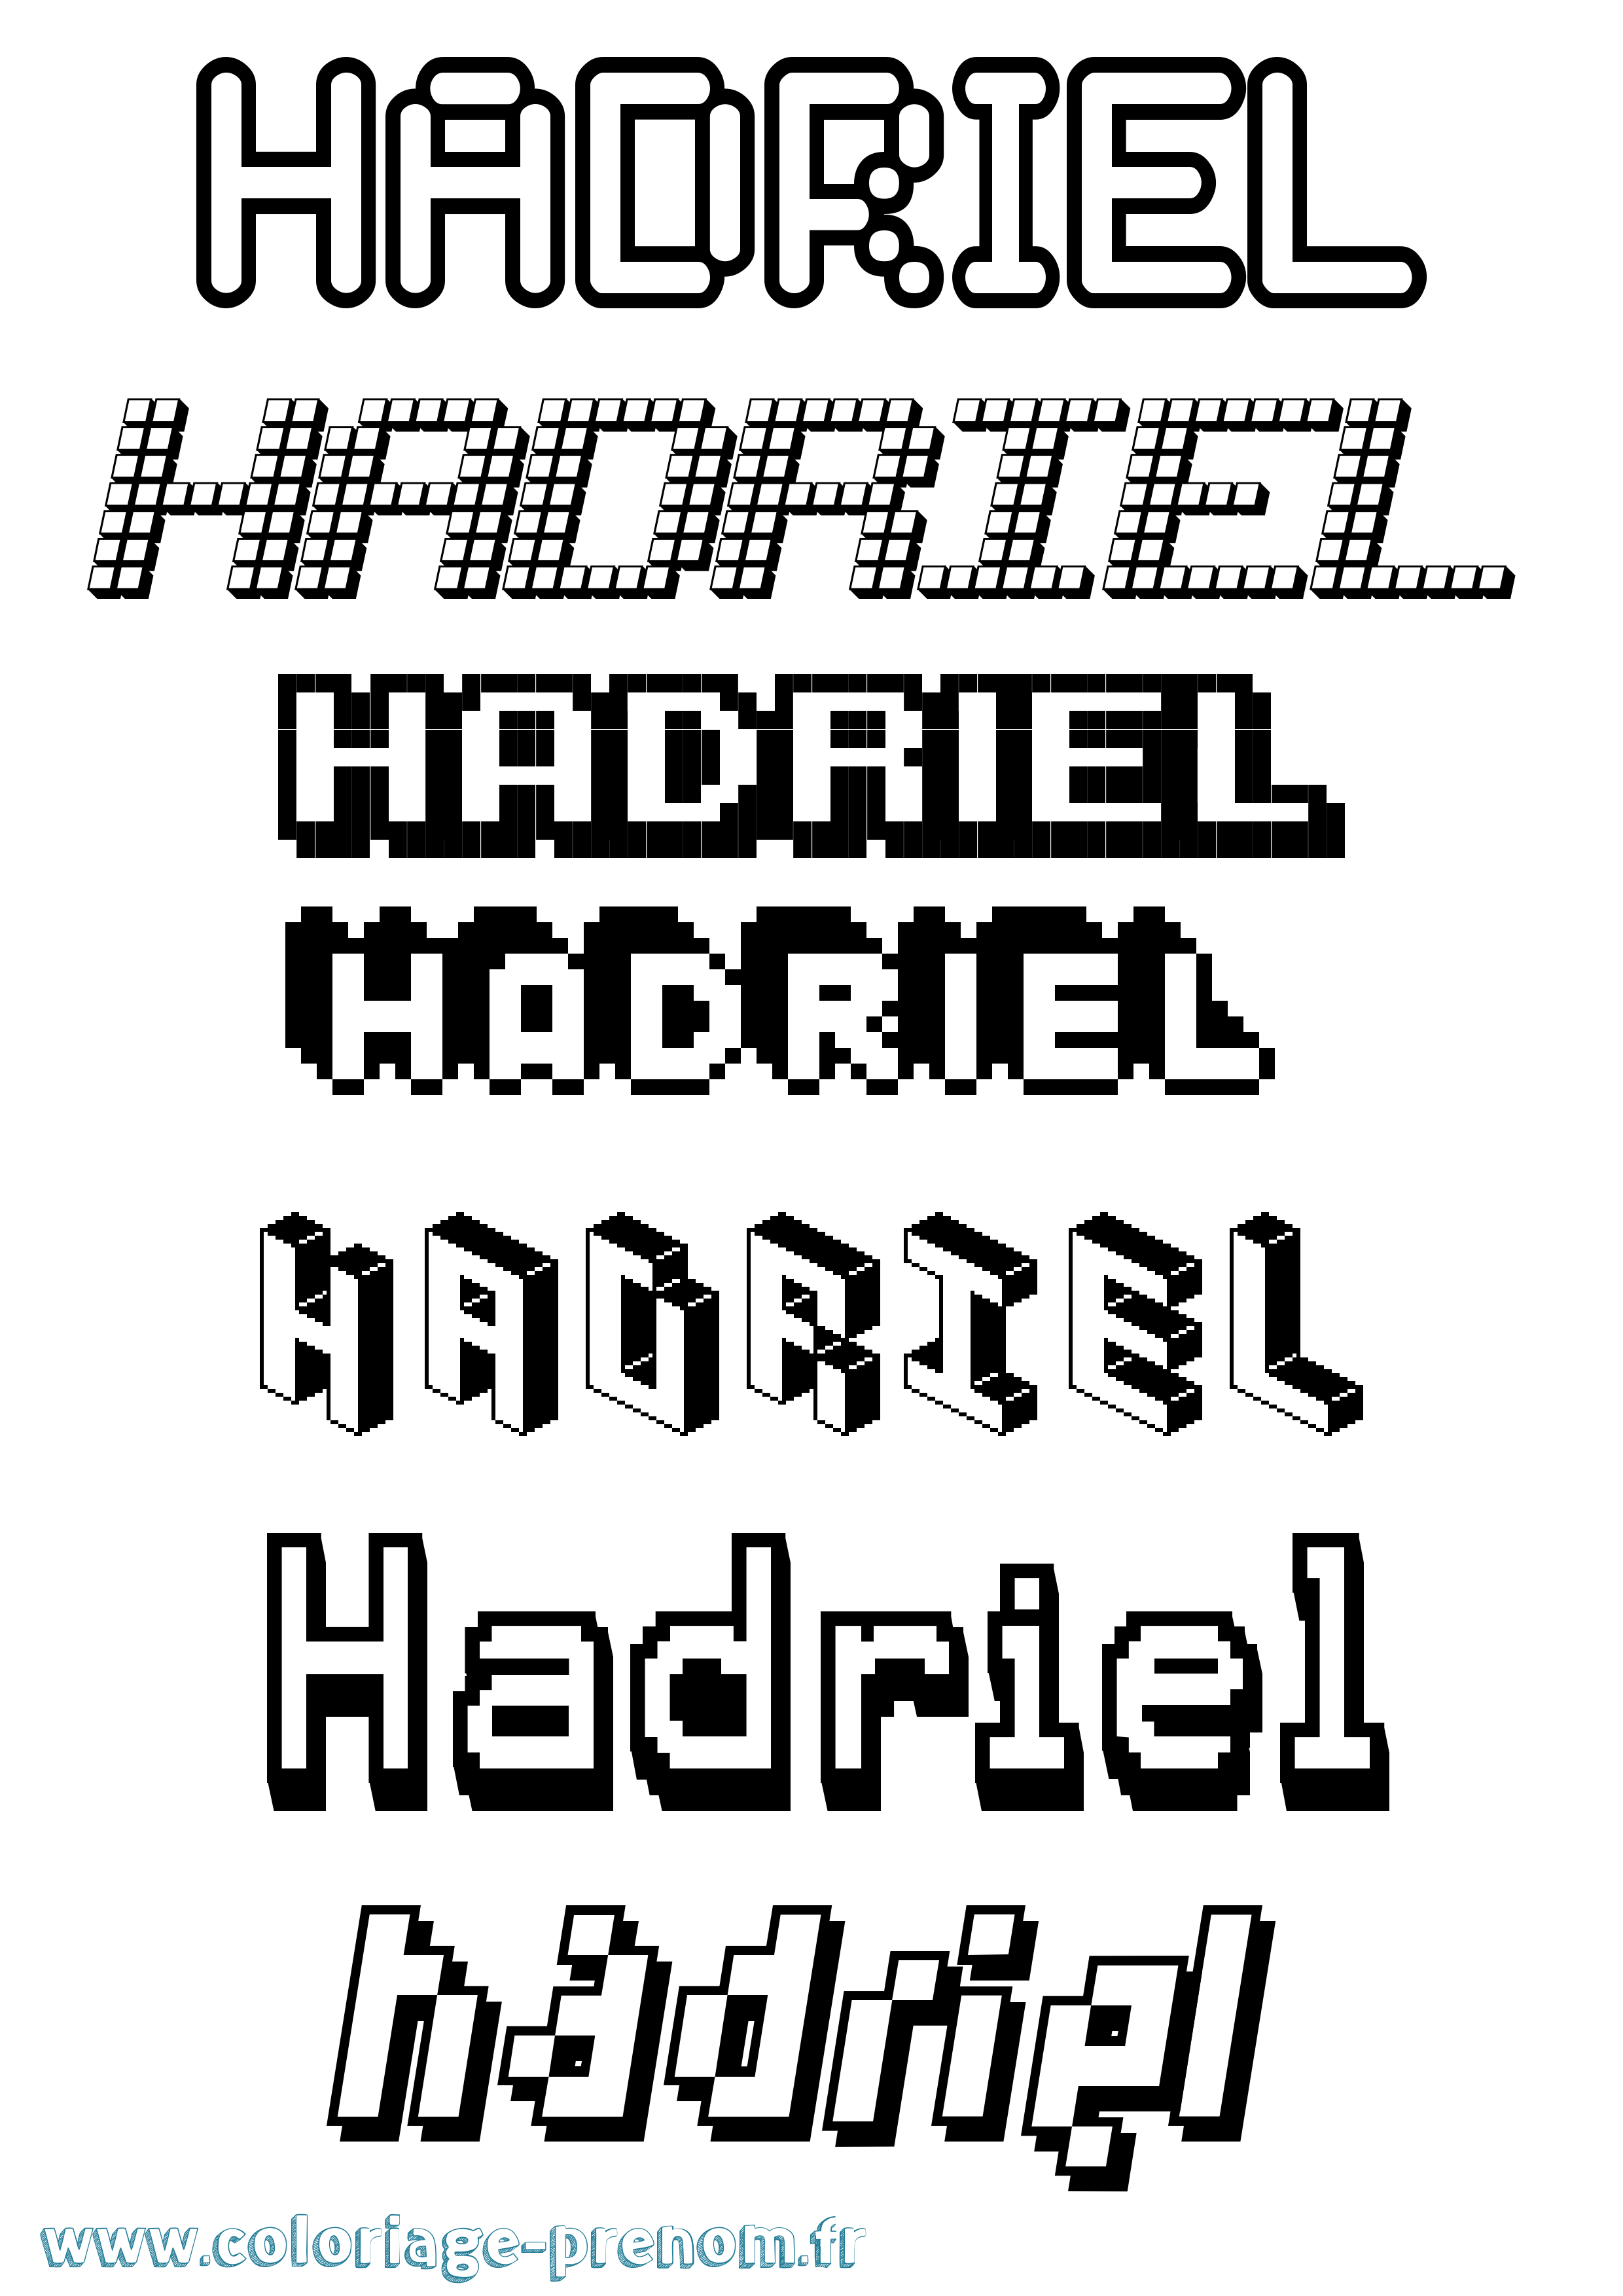 Coloriage prénom Hadriel Pixel